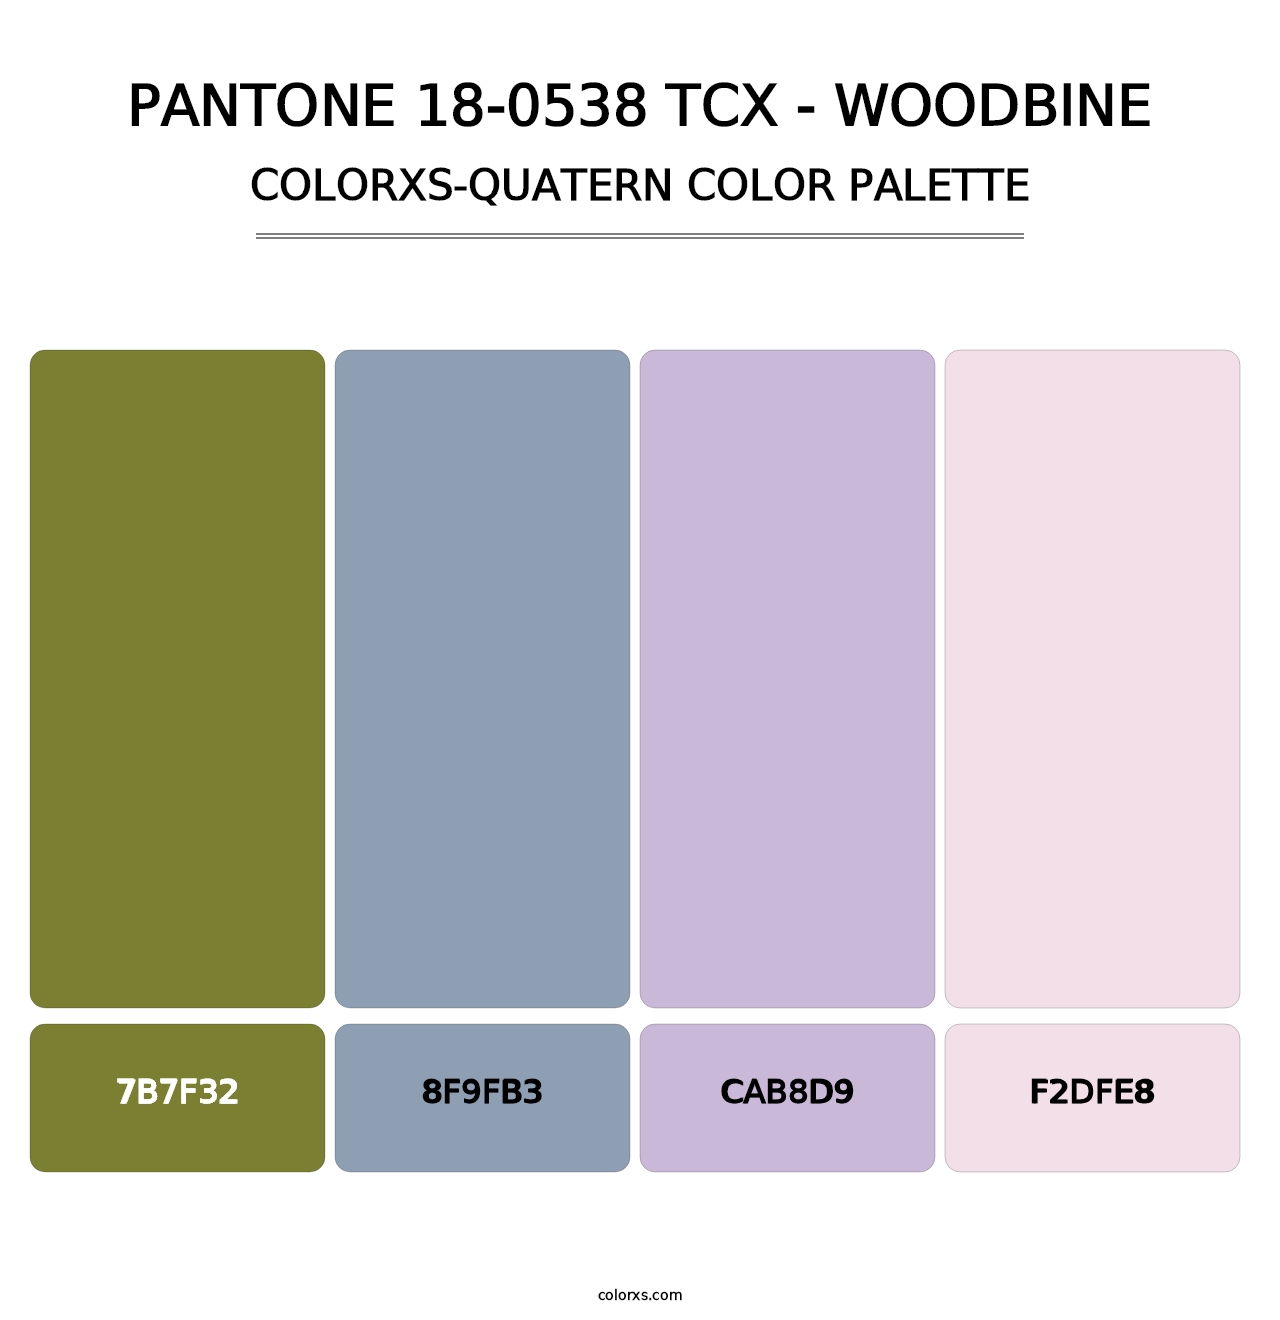 PANTONE 18-0538 TCX - Woodbine - Colorxs Quatern Palette